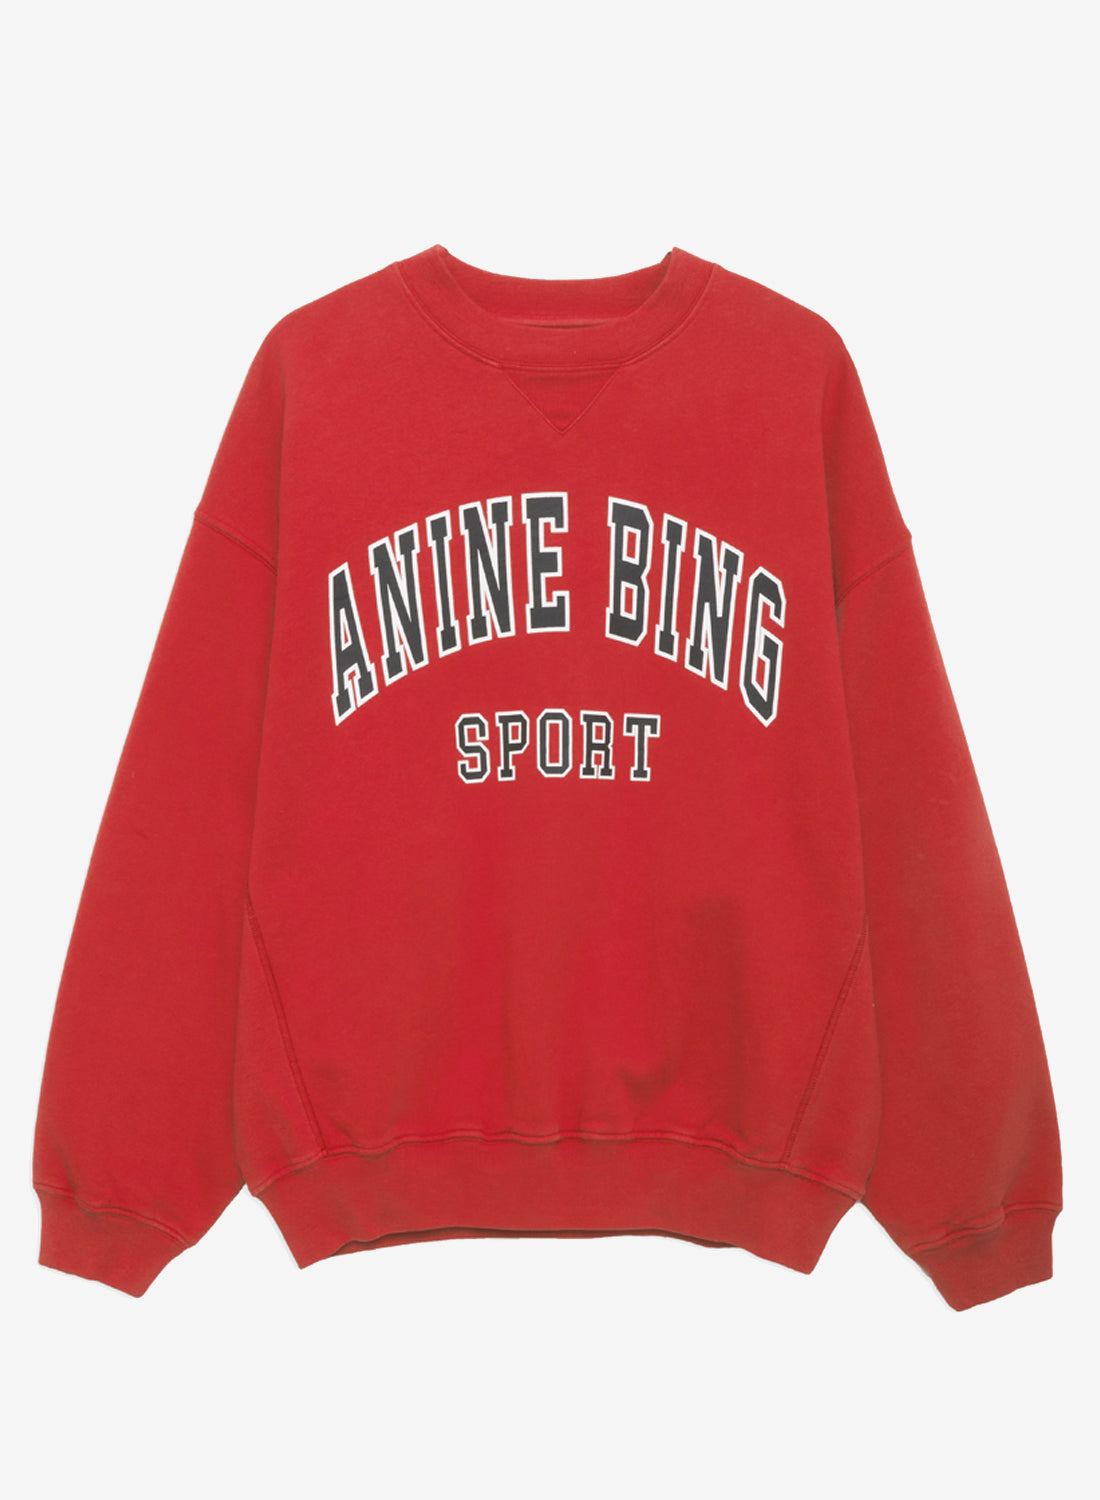 Anine Bing Jaci Sweatshirt Red - PREORDER